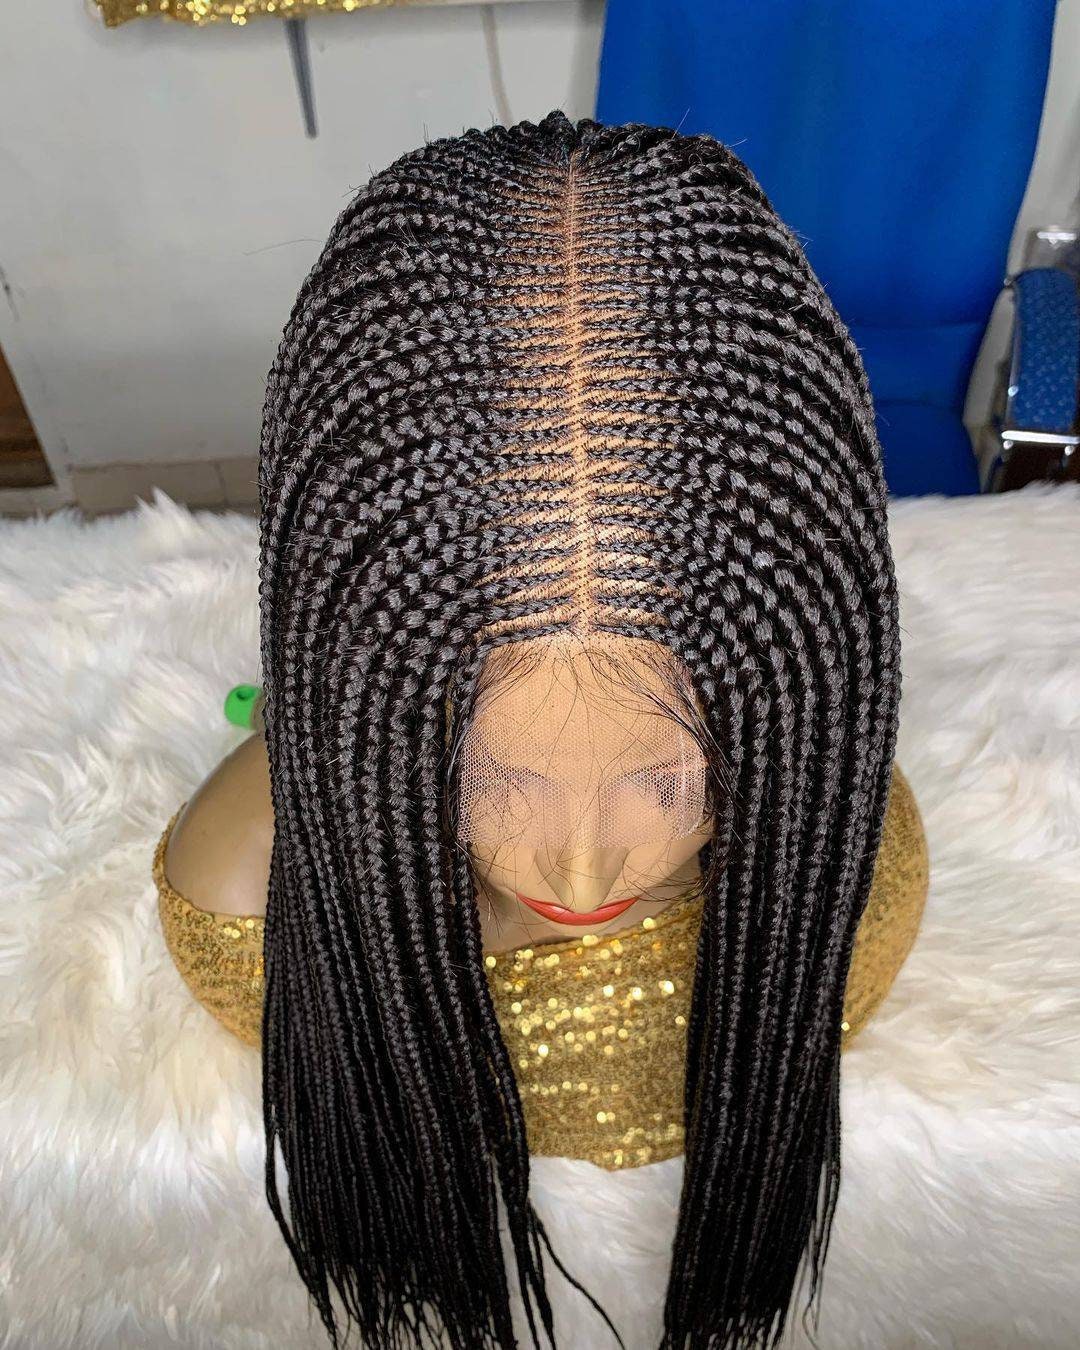 3 in 1 set of braided wigs, knotless braid wig, cornrow wig, micro braid wig, cheap synthetic braid wigs, braided wigs for black women